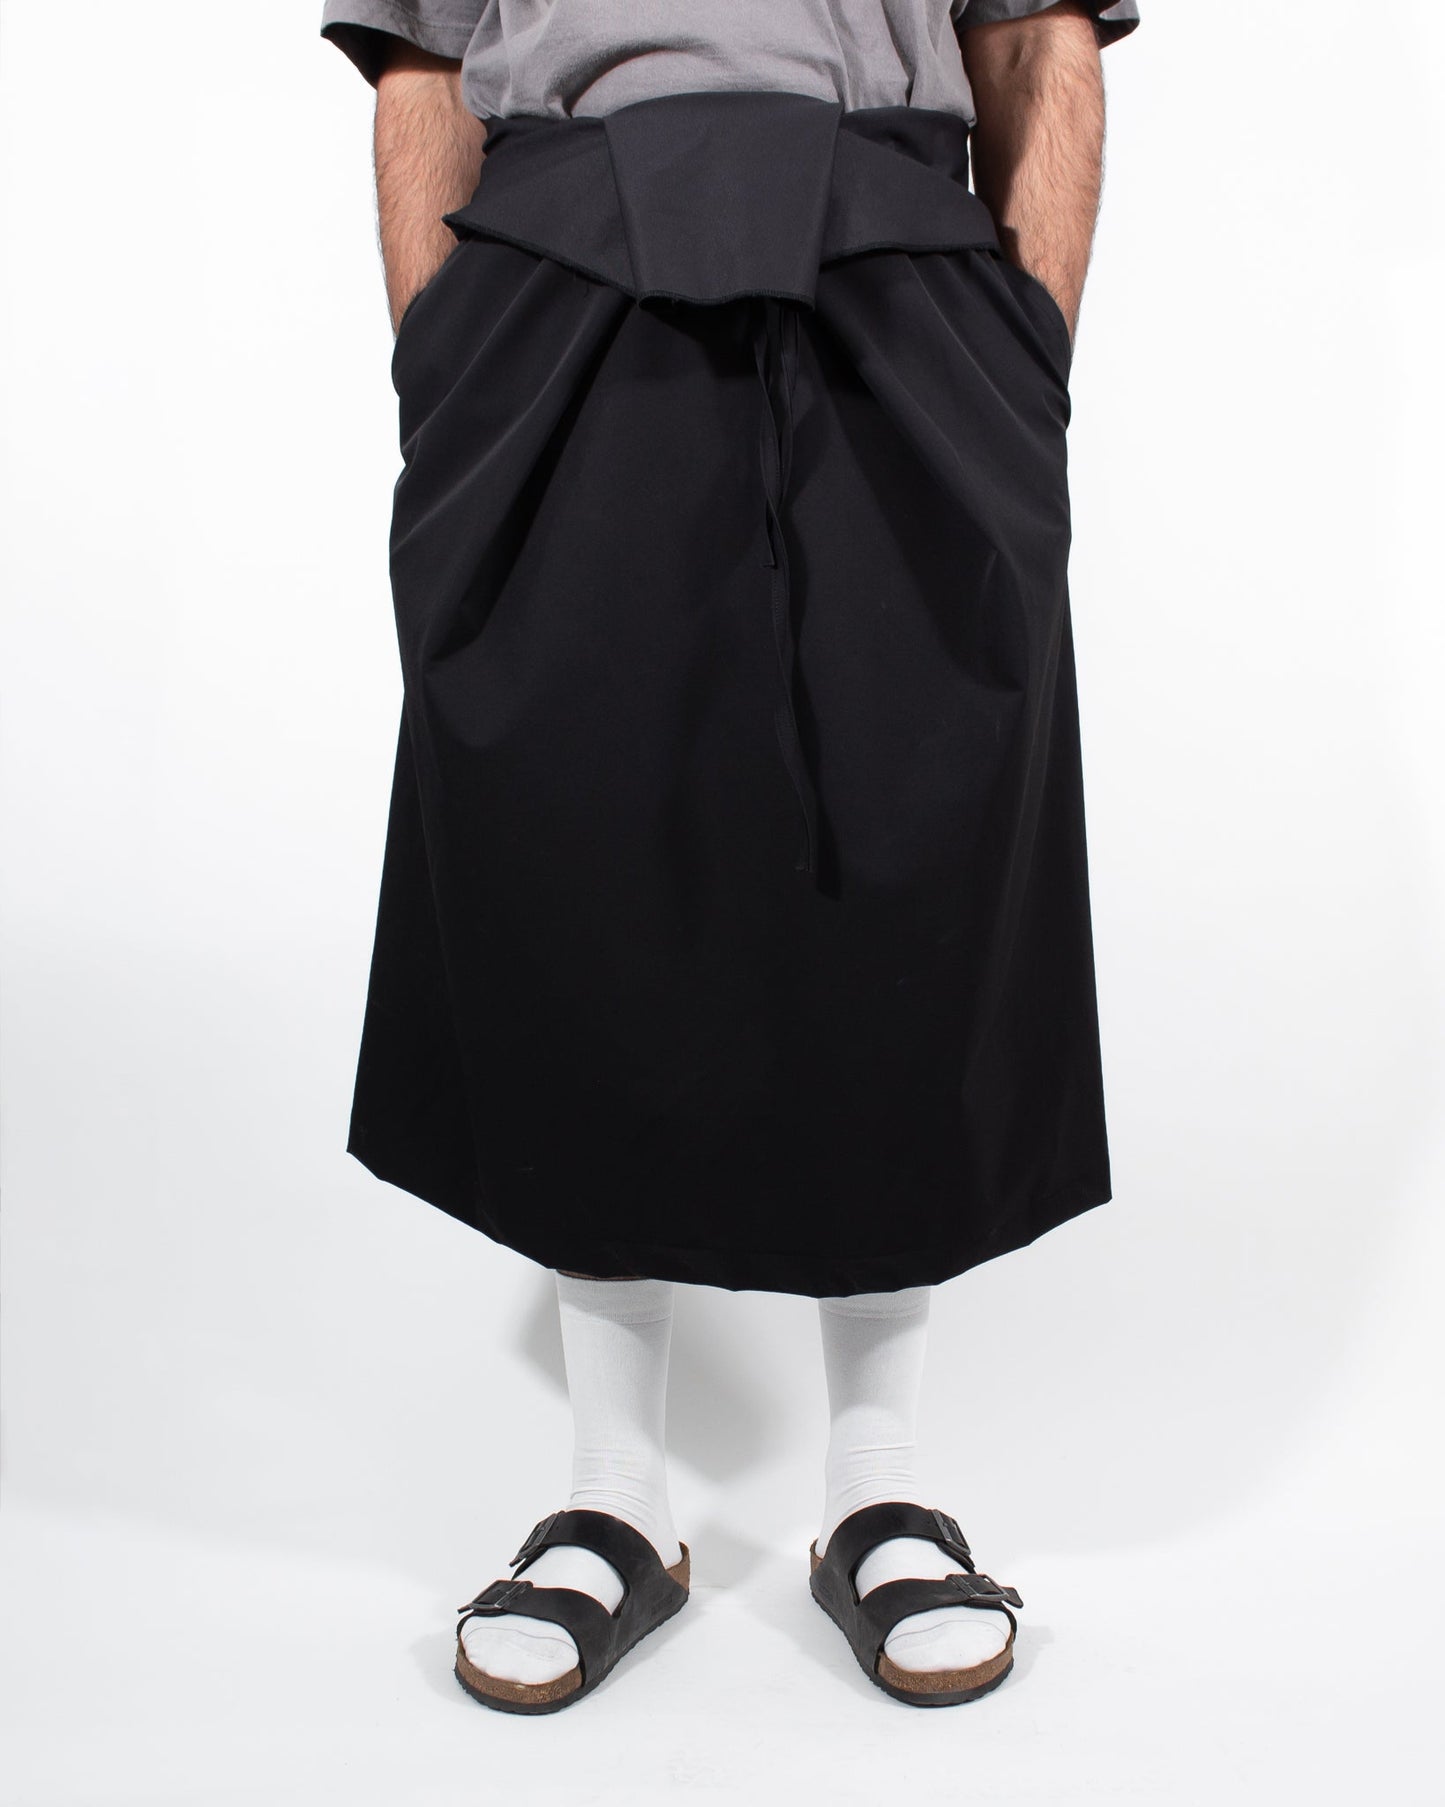 Simple Skirt - V1 - GARUDA